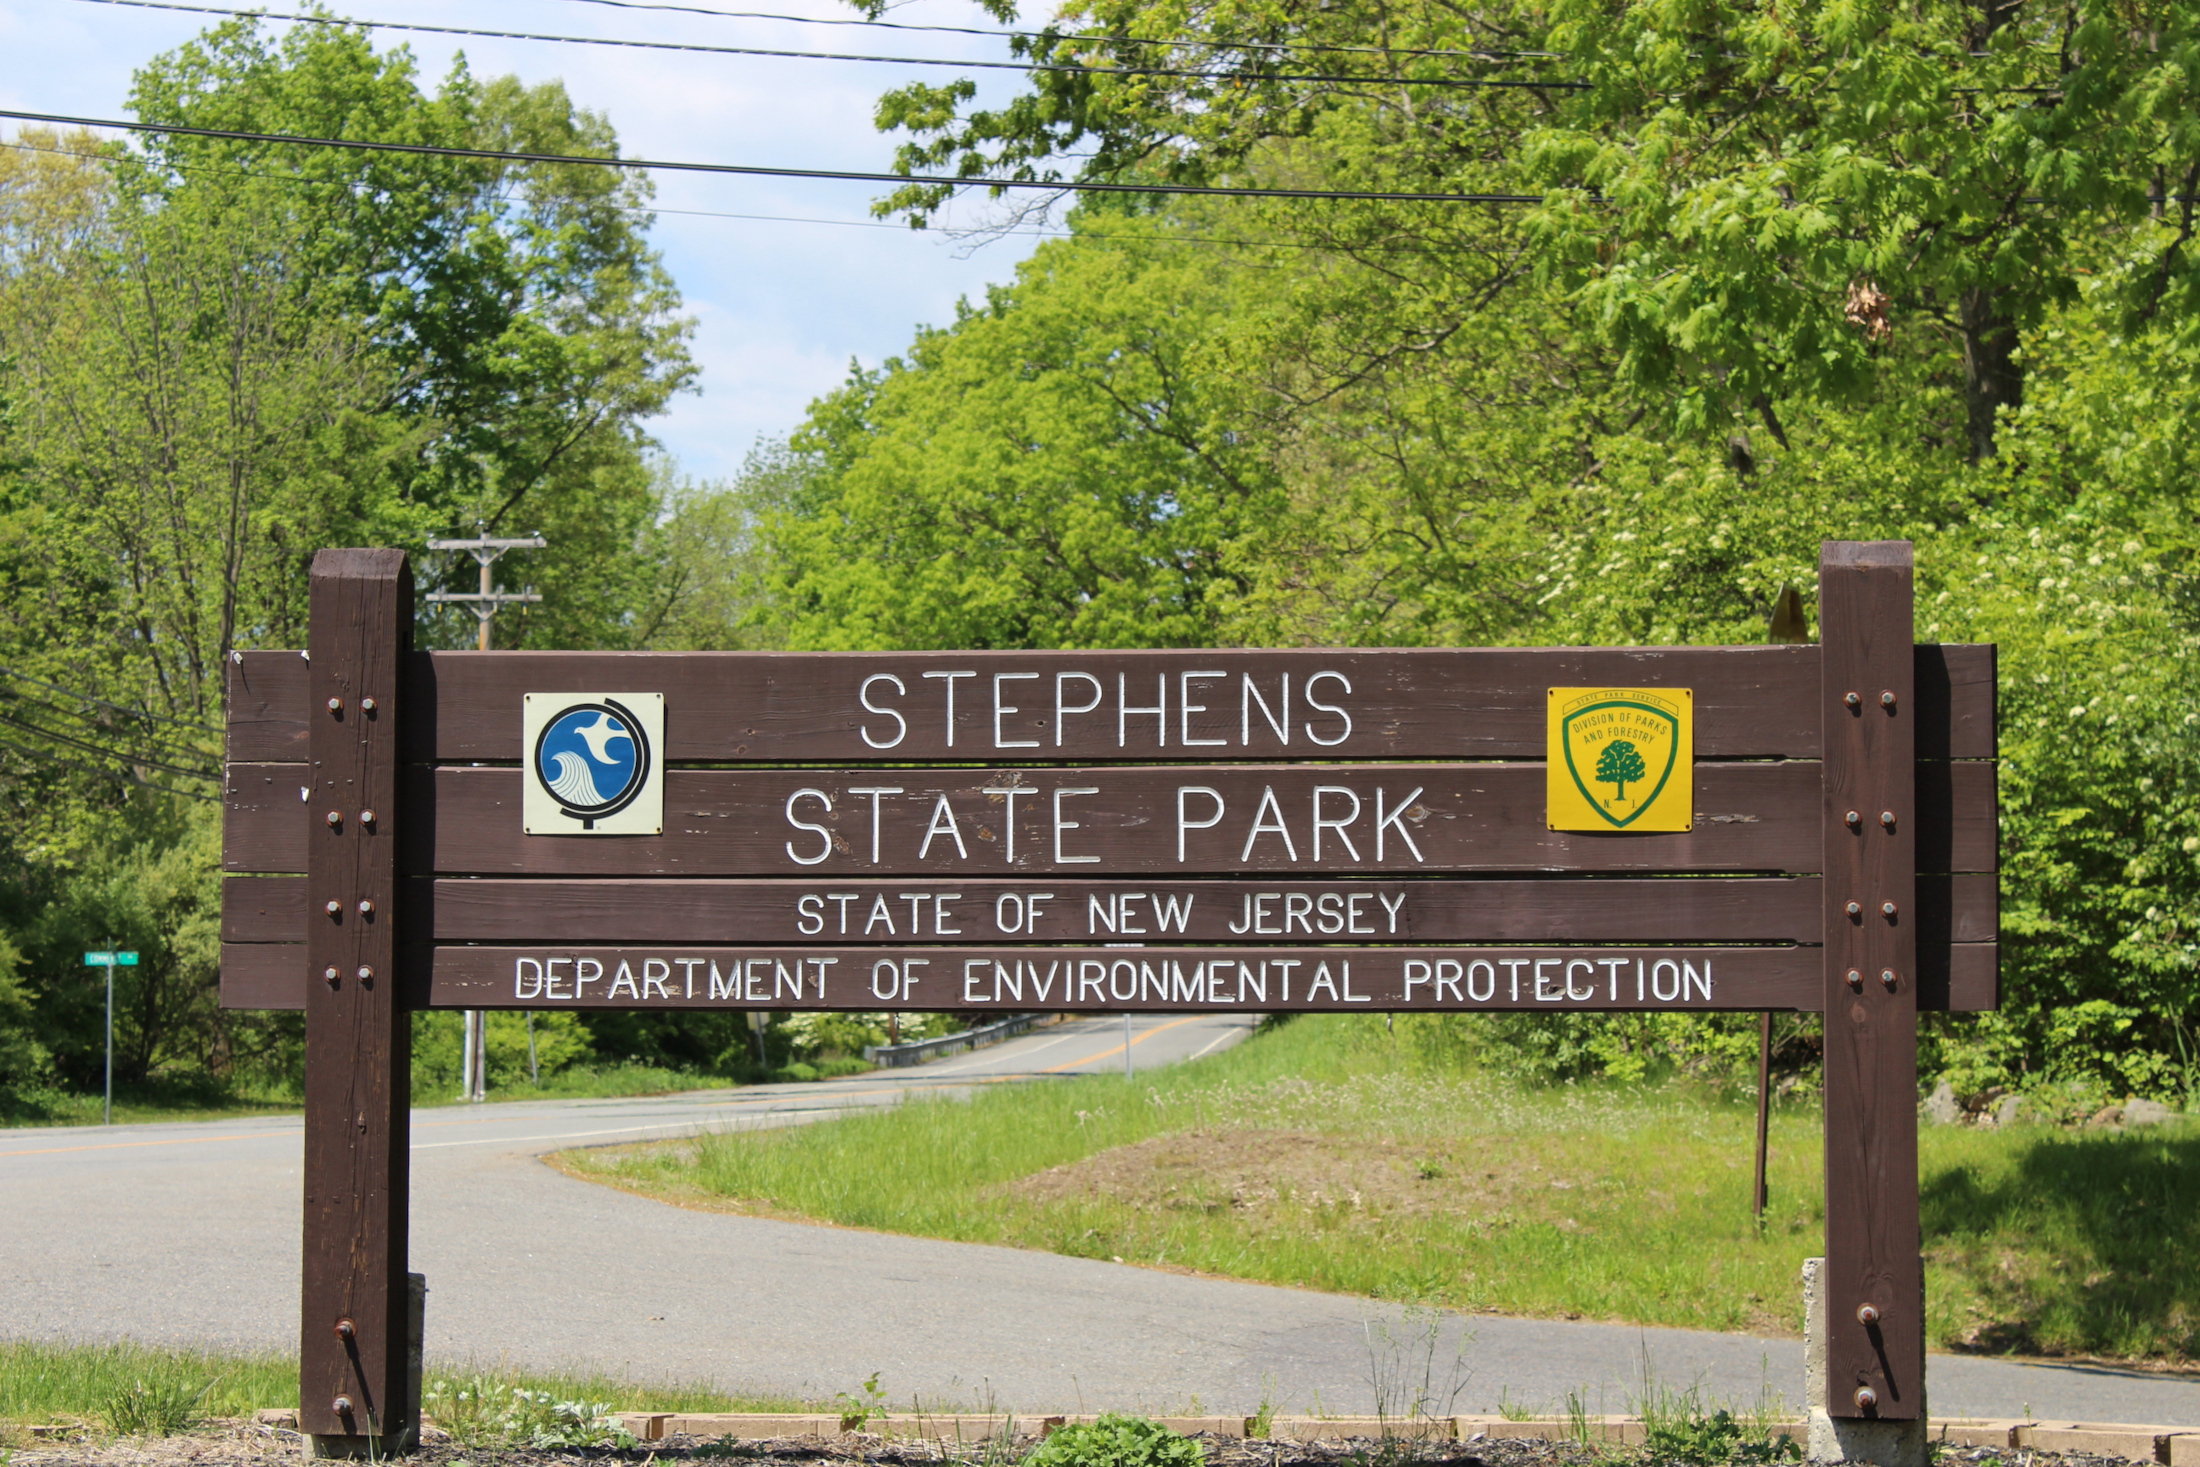 Stephens State Park